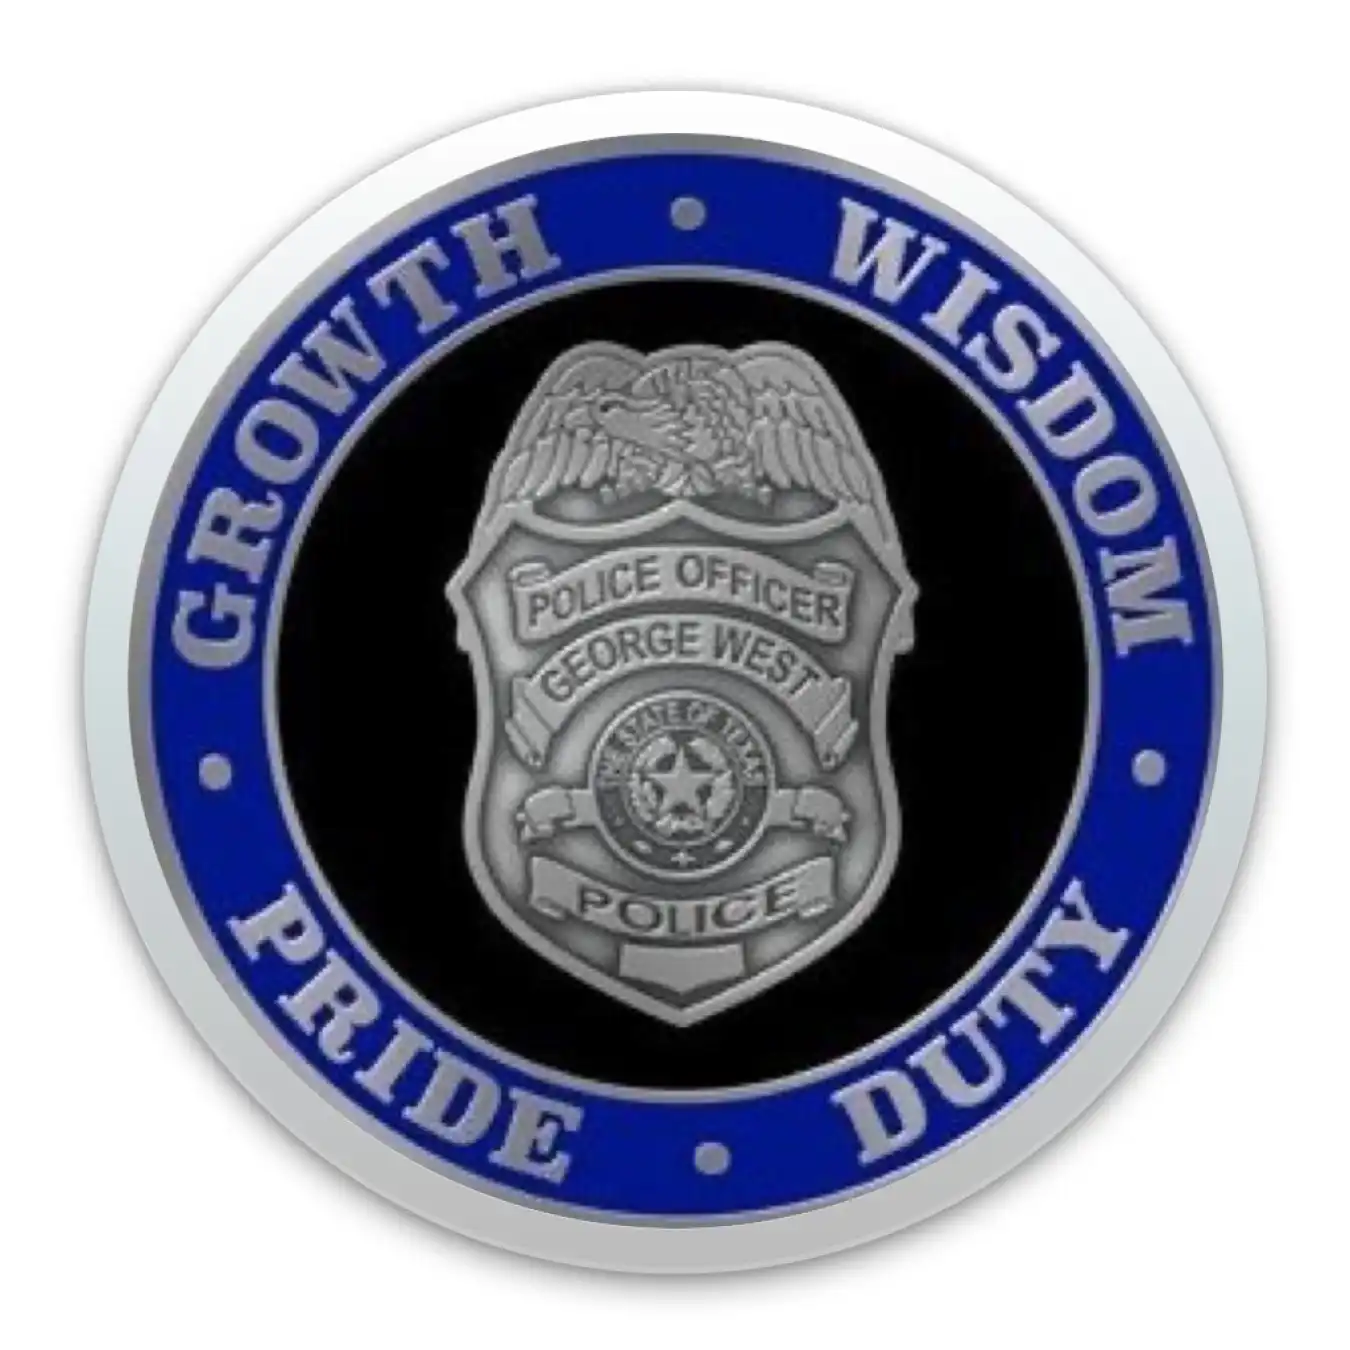 George West Police Department